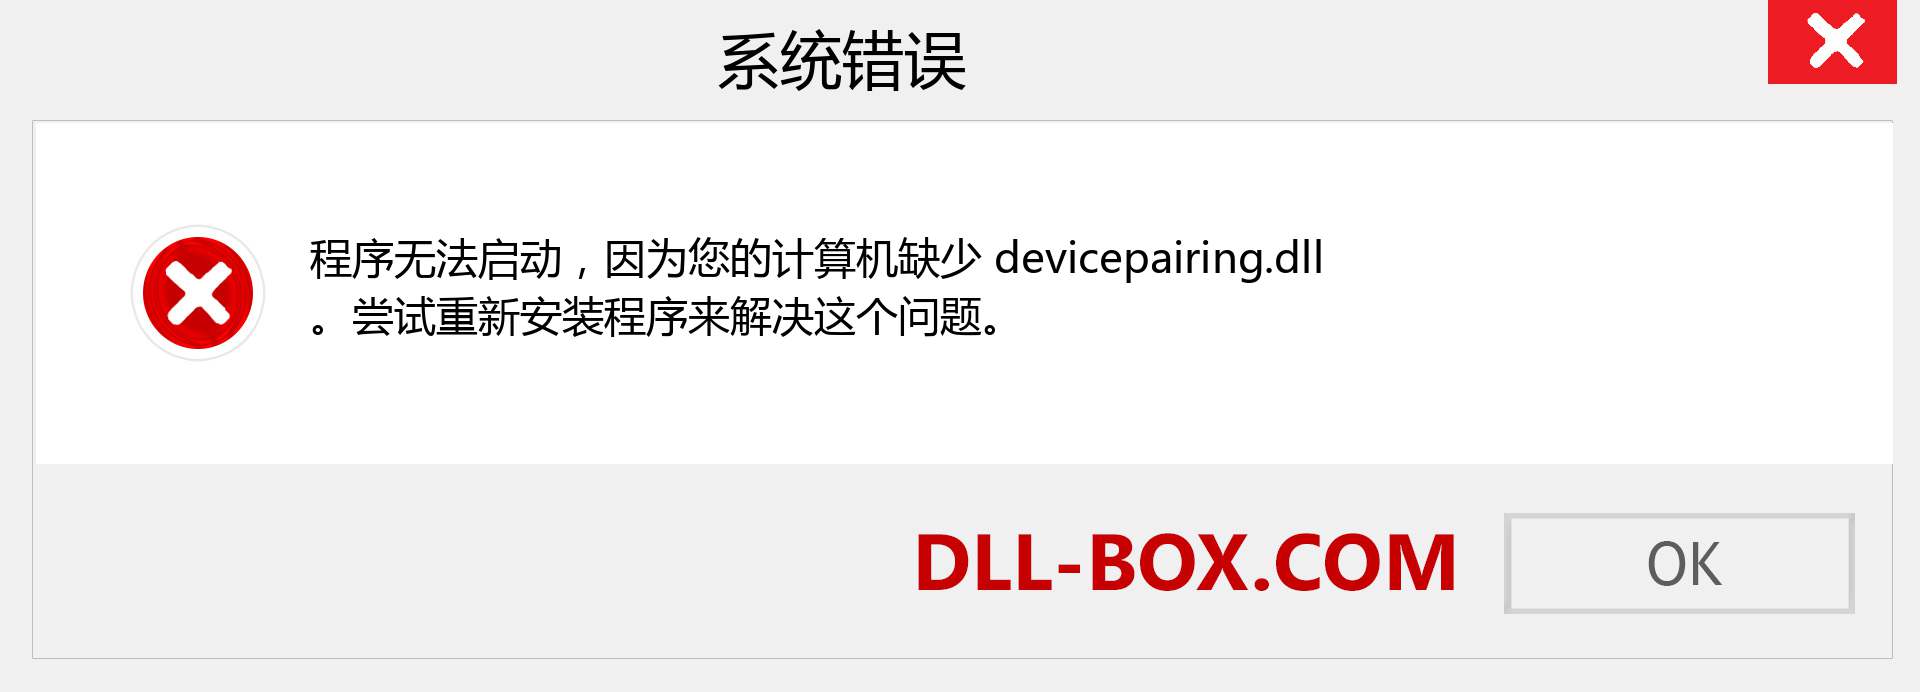 devicepairing.dll 文件丢失？。 适用于 Windows 7、8、10 的下载 - 修复 Windows、照片、图像上的 devicepairing dll 丢失错误